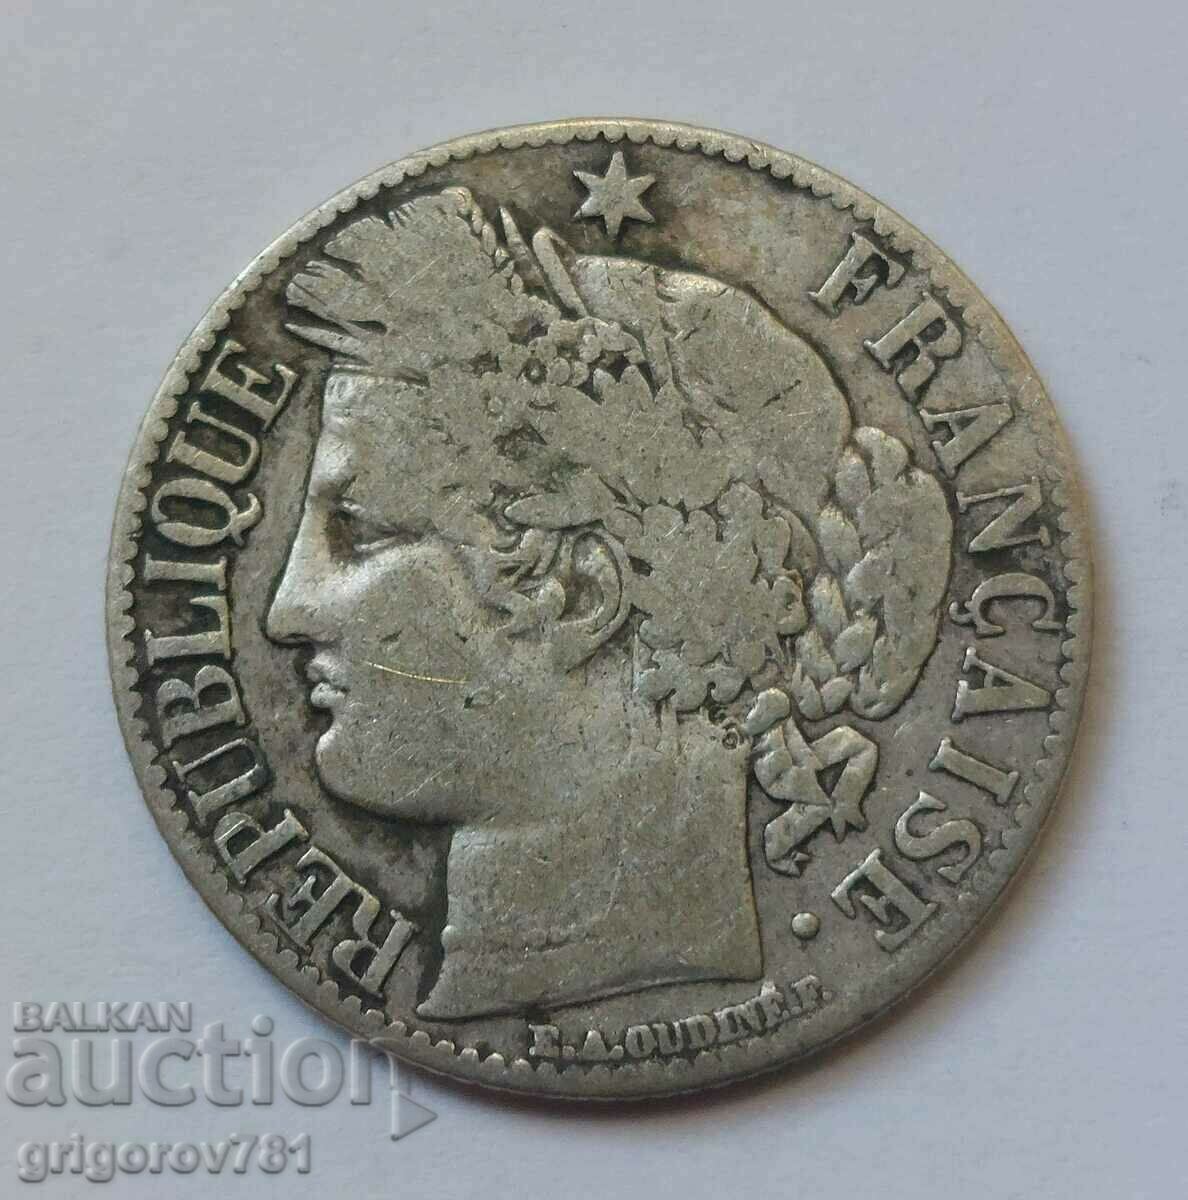 1 Franc Silver France 1871 K - Silver Coin #33